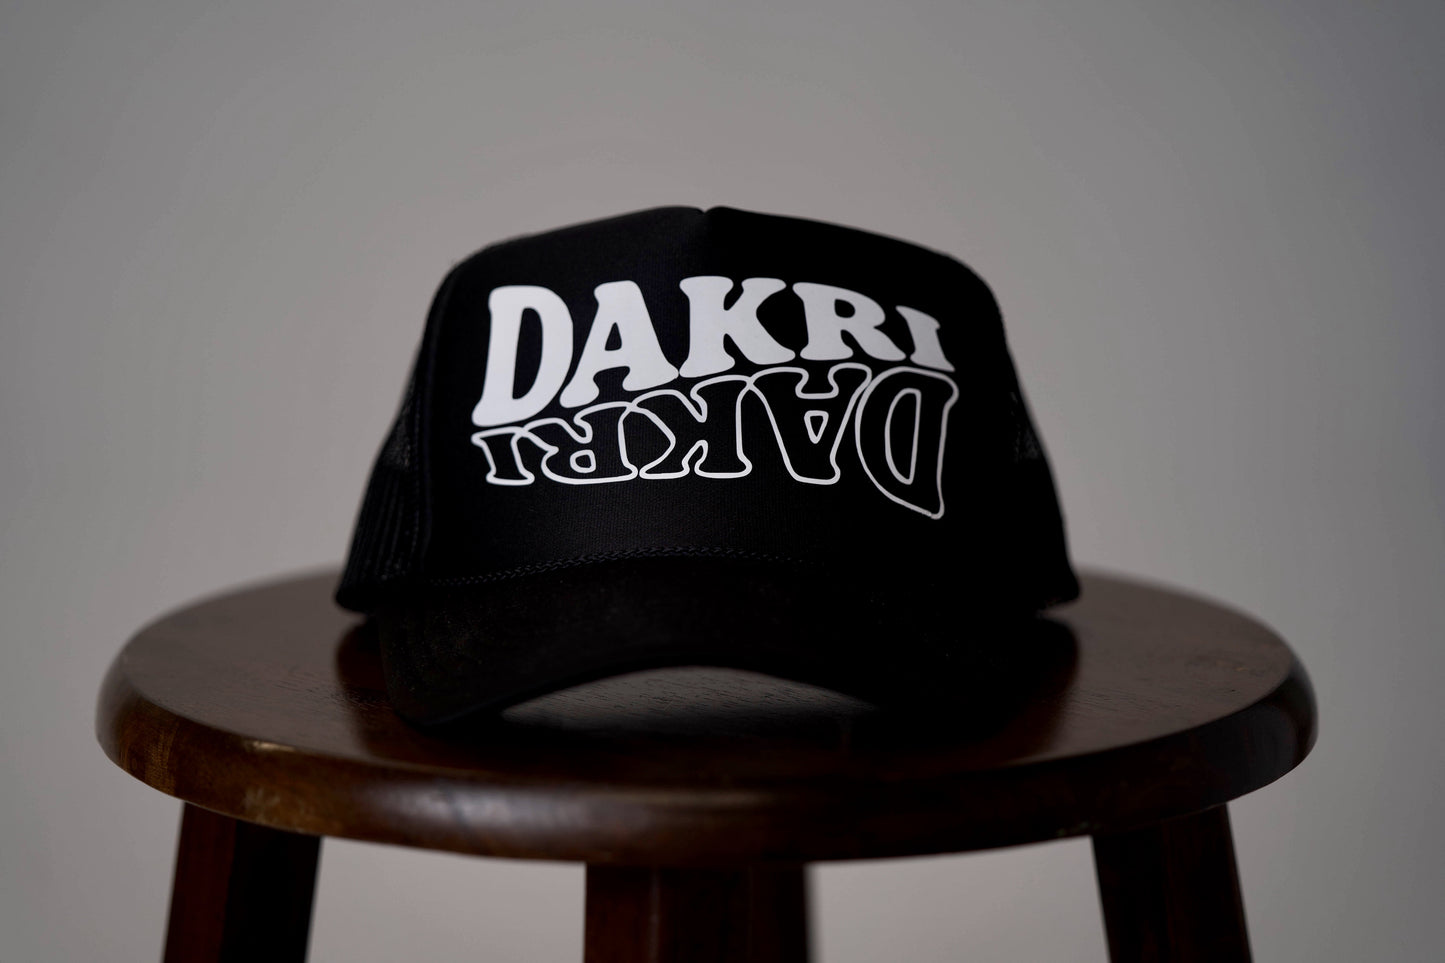 DAKRI V2 Trucker Hats